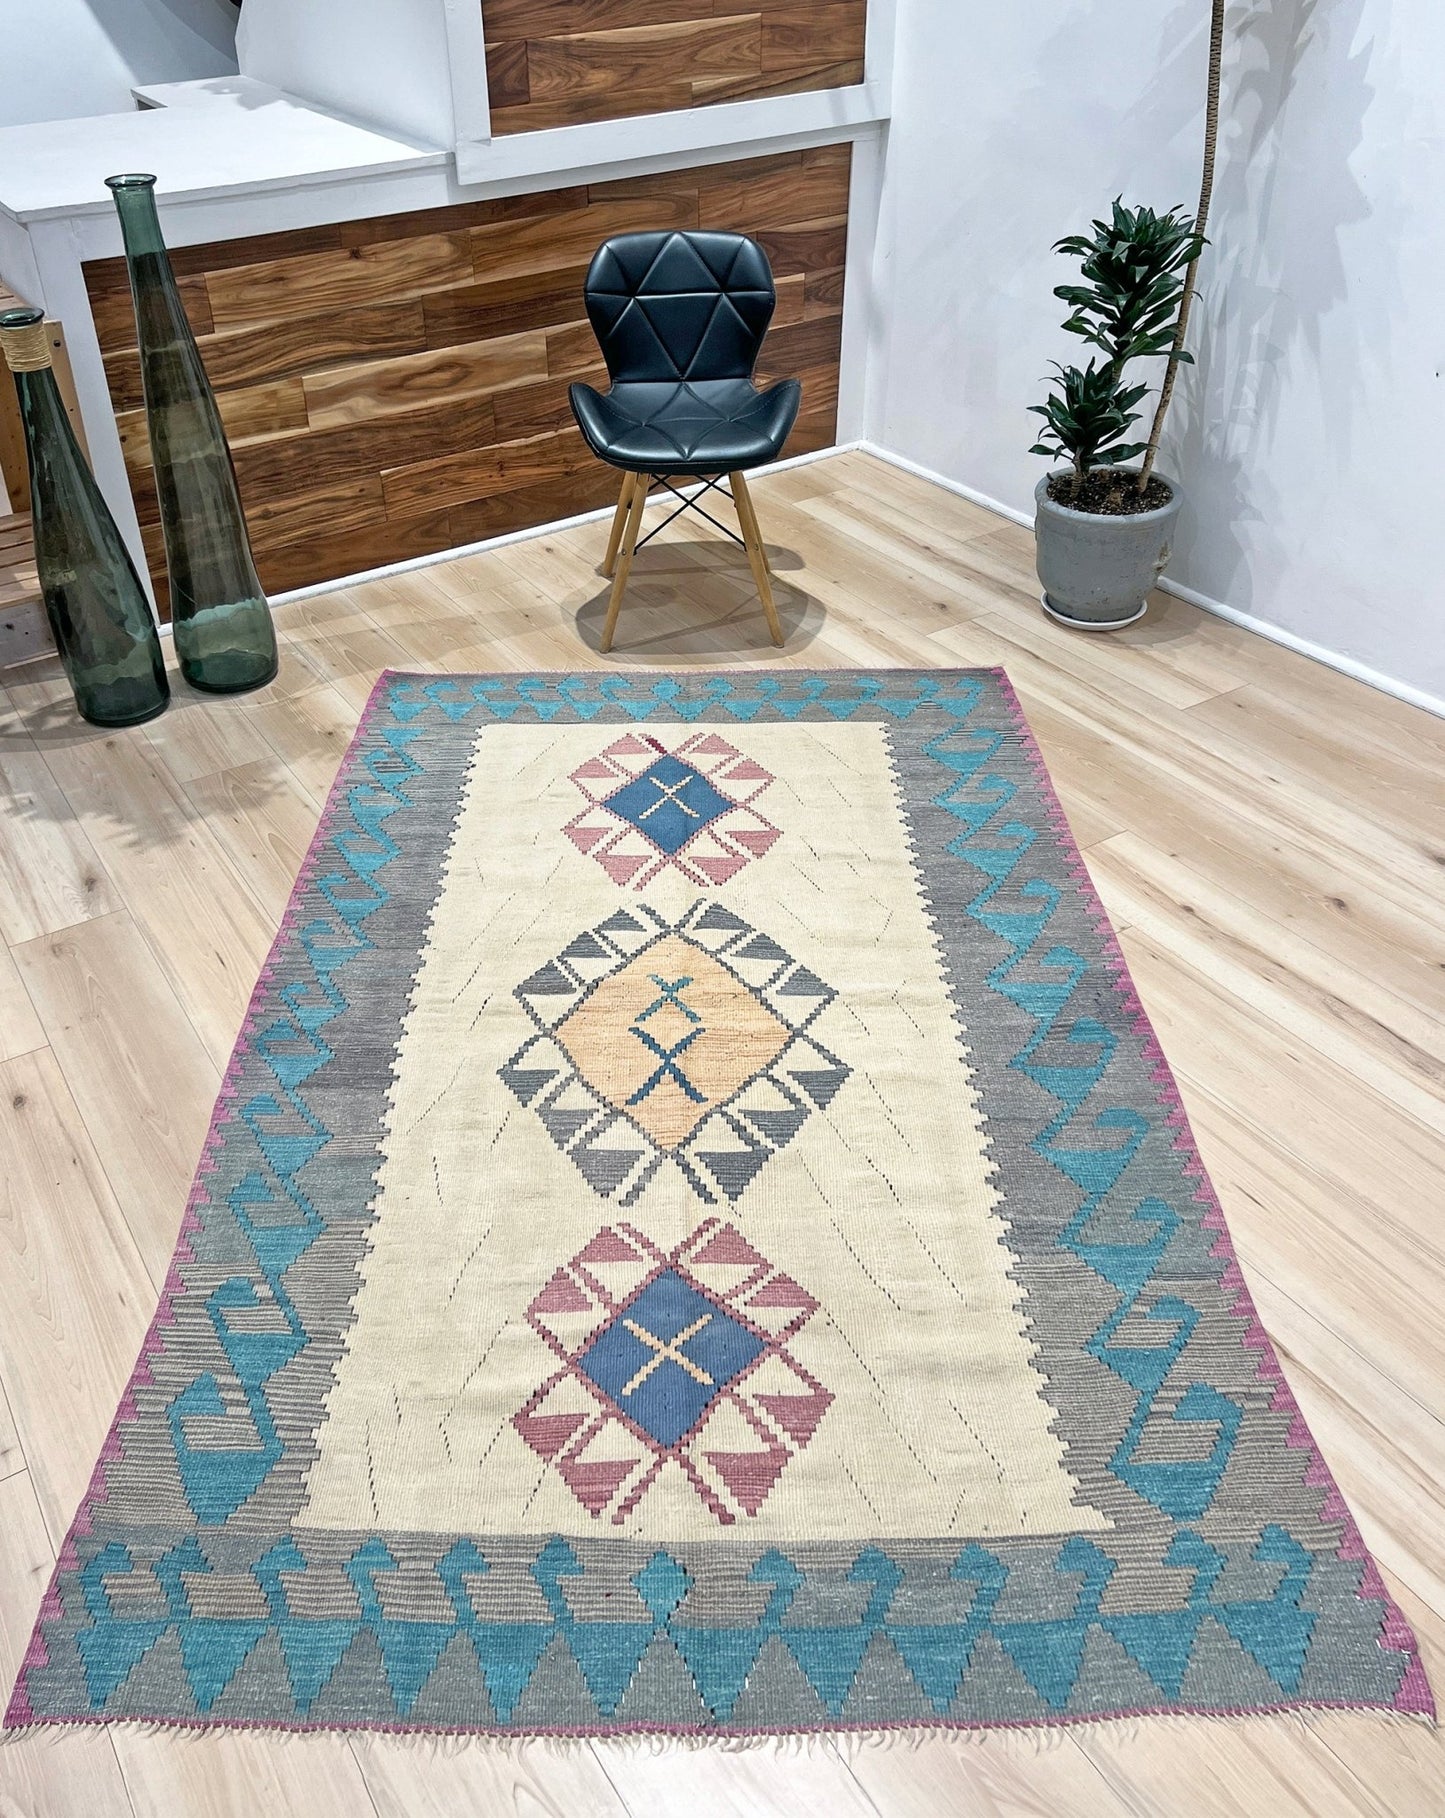 Tribal Turkish Kilim rug shop san francisco bay area. Navajo style blue flatweave rug.